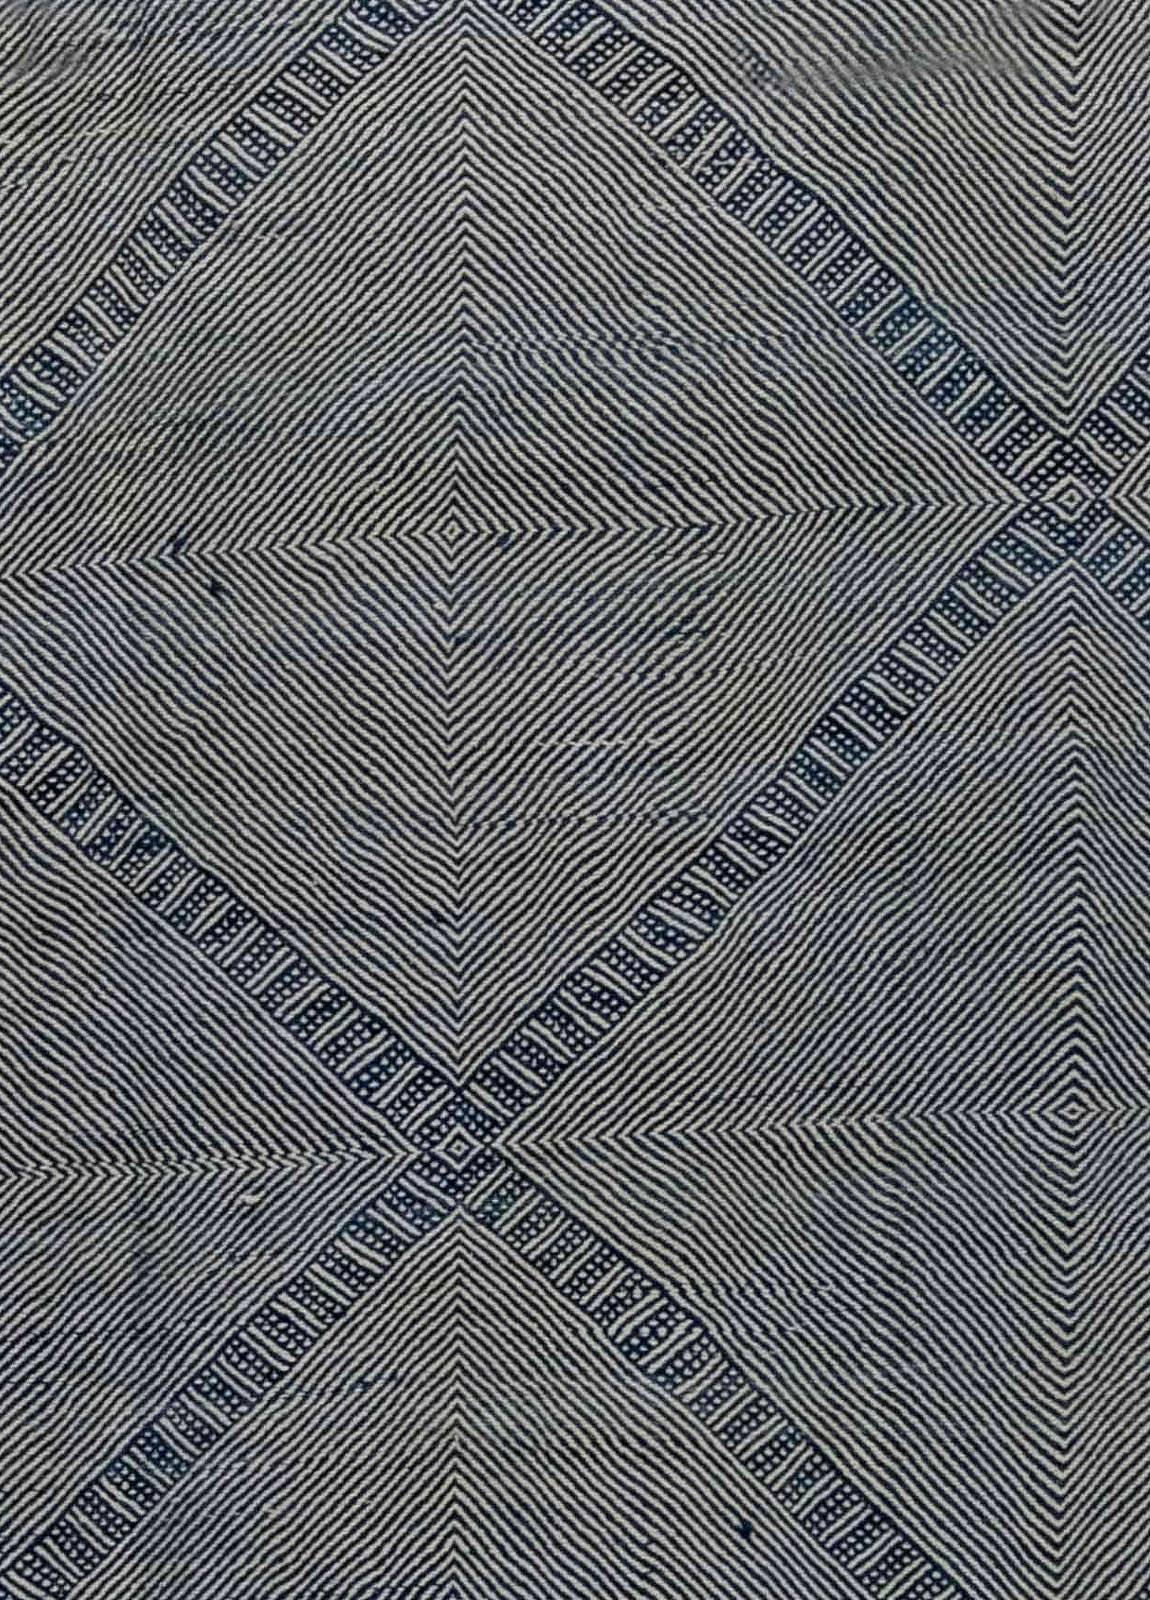 Modern oversized blue and grey deux diamond rug by Doris Leslie Blau
Size: 18'0